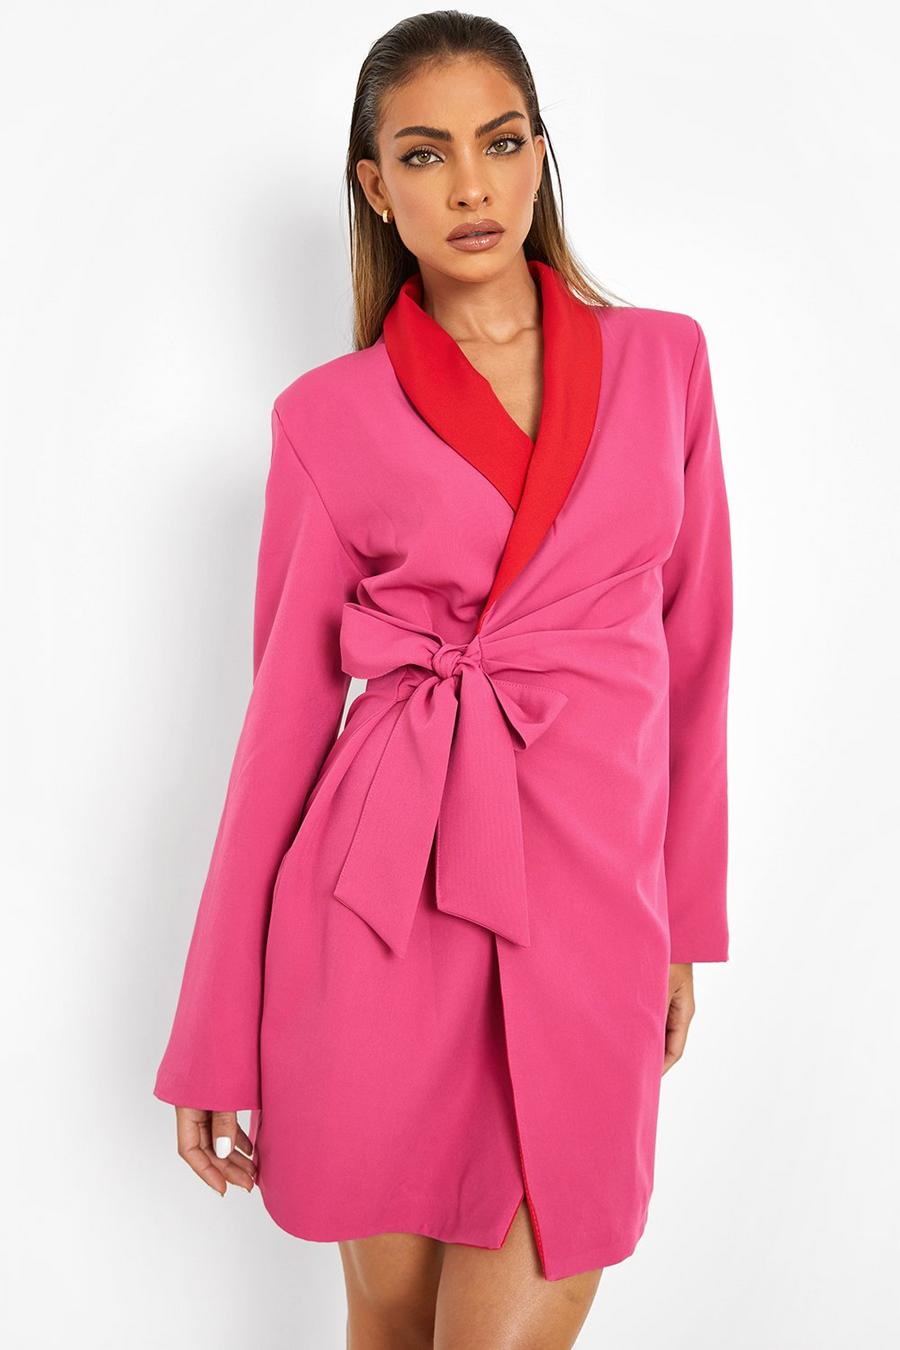 Hot pink rosa שמלת בלייזר עם קשירה בצד וצווארון בצבעים מנוגדים